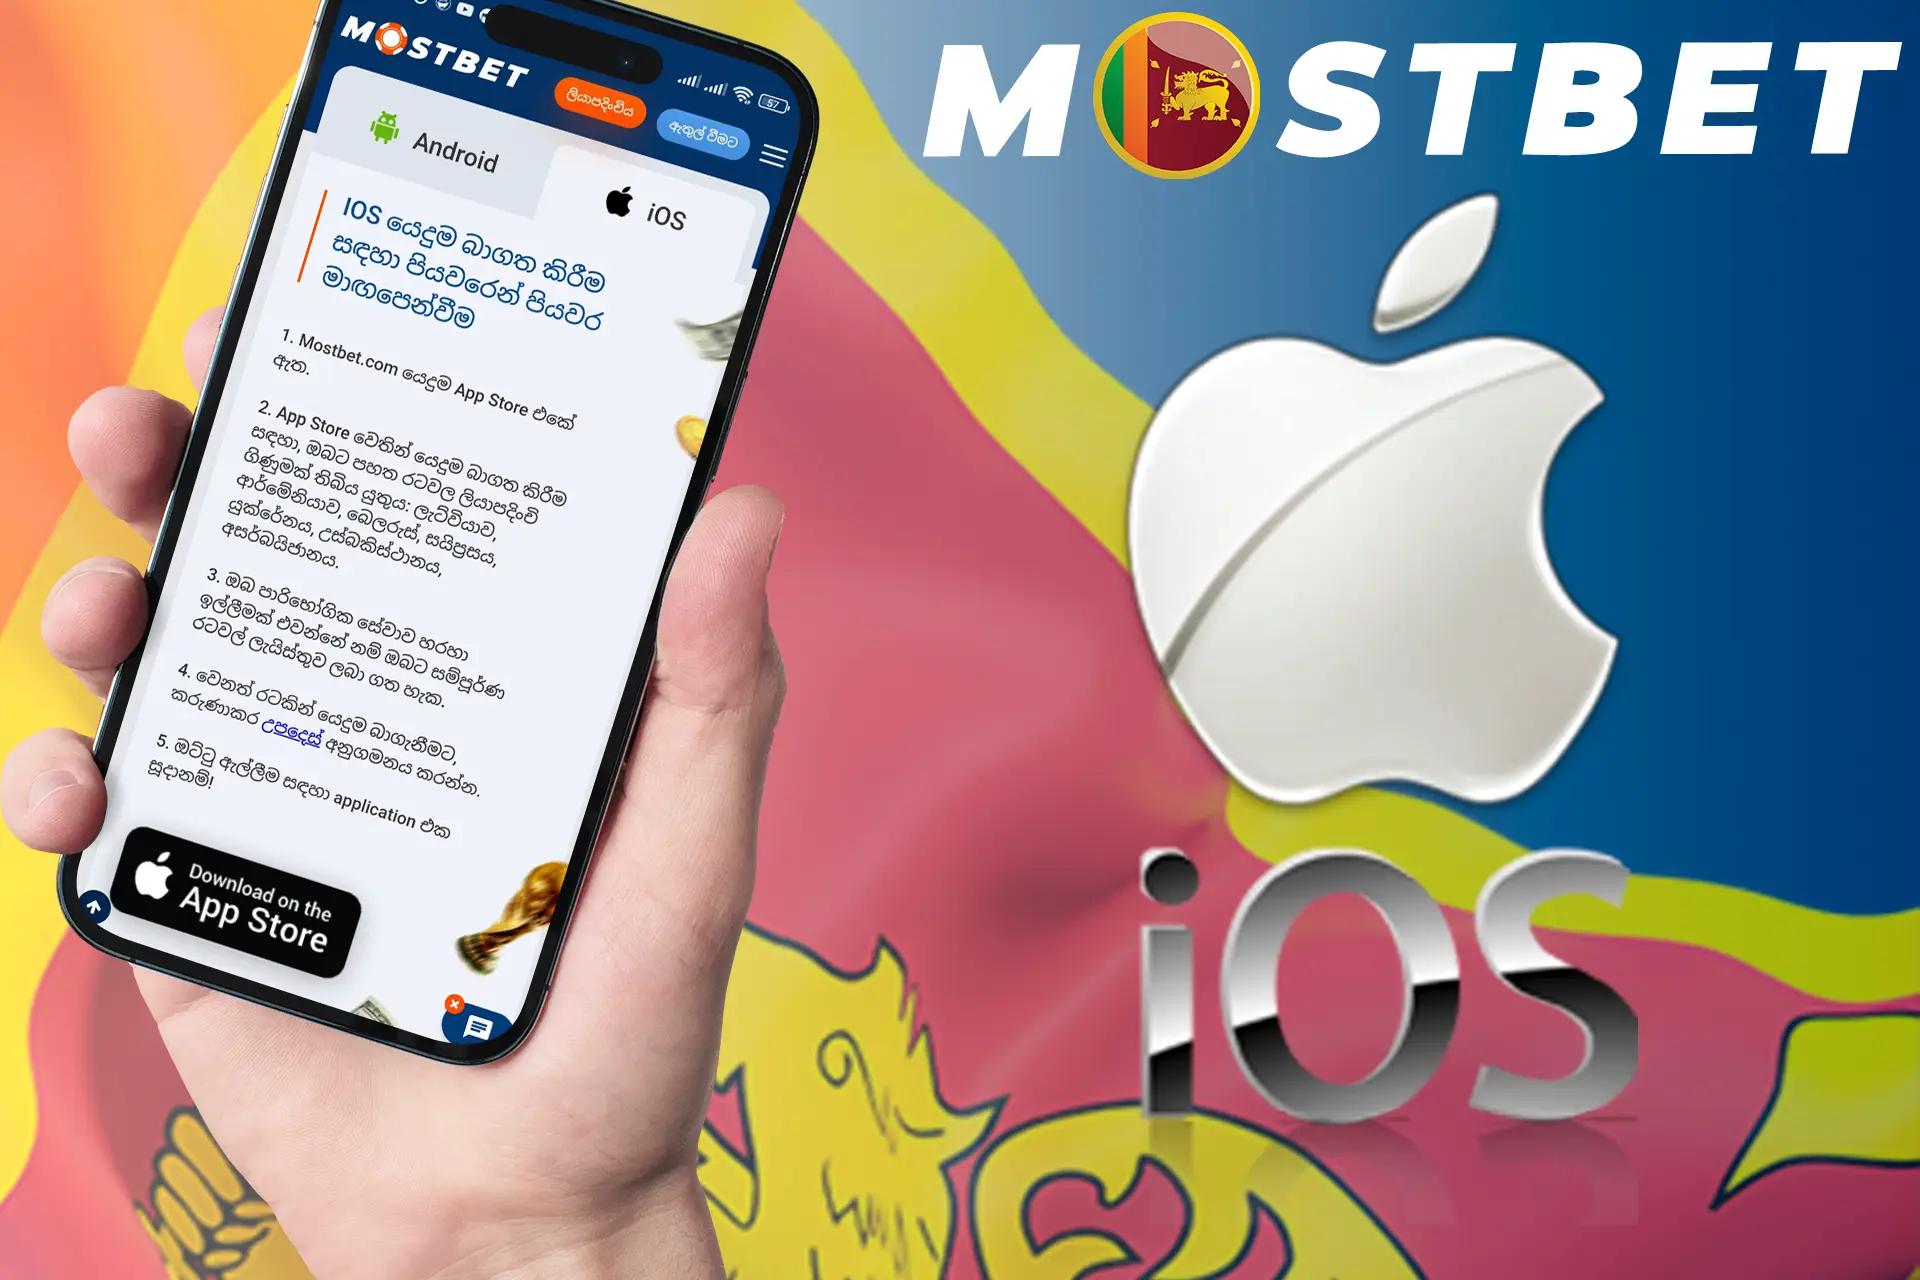 Download the Mostbet Sri Lanka mobile app on iOS